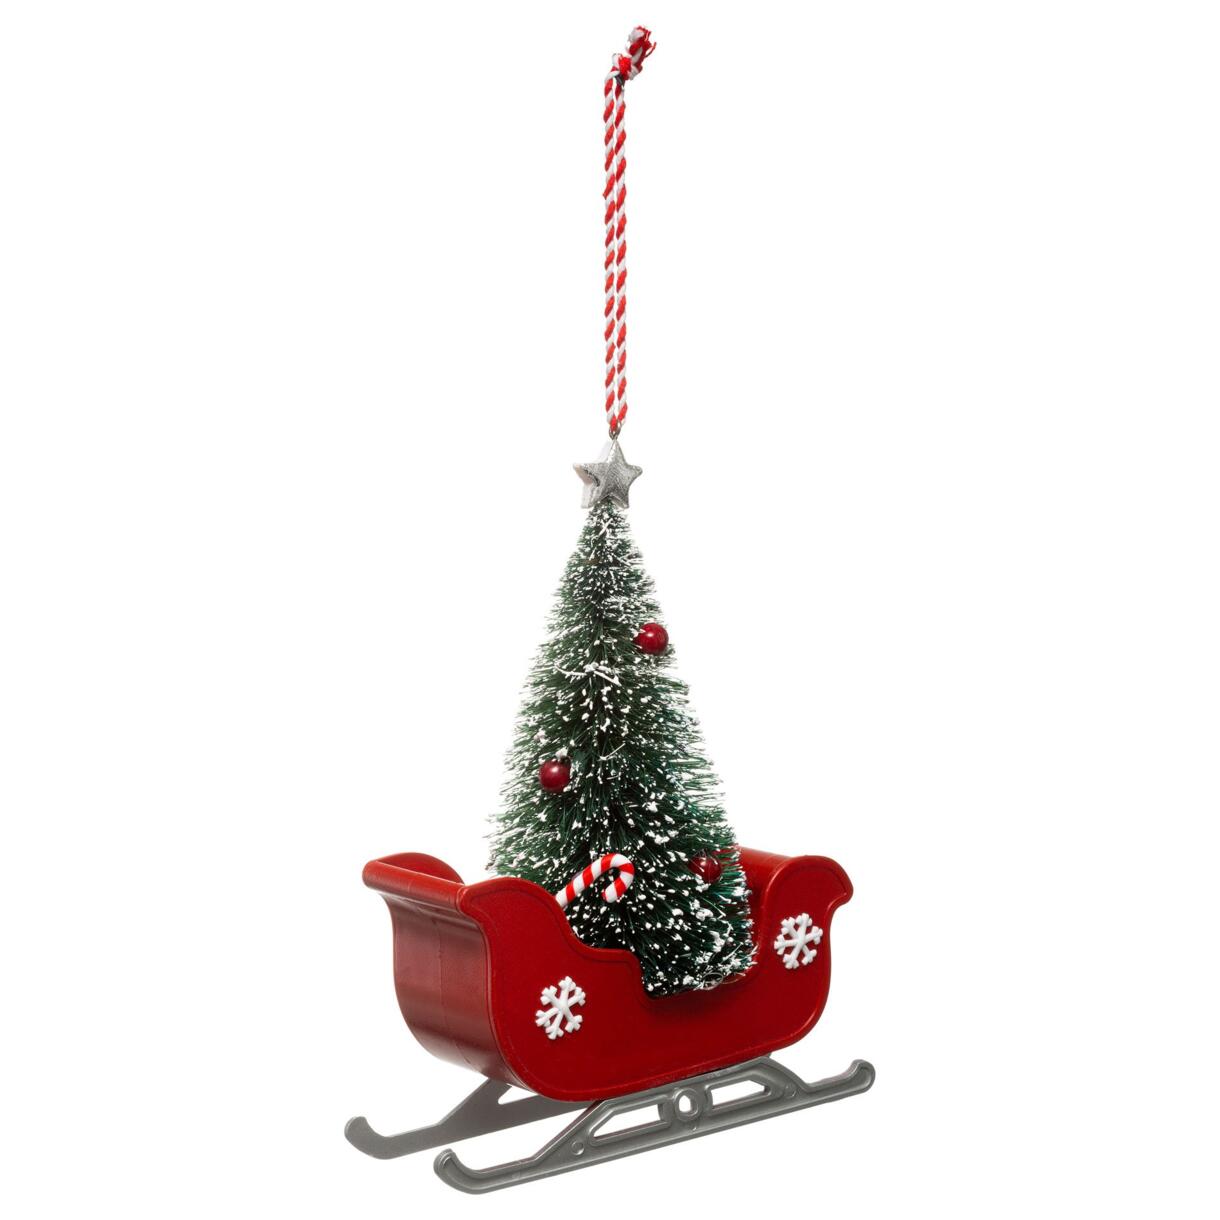 Slee Slee met kerstboom hangdecoratie Rood 1